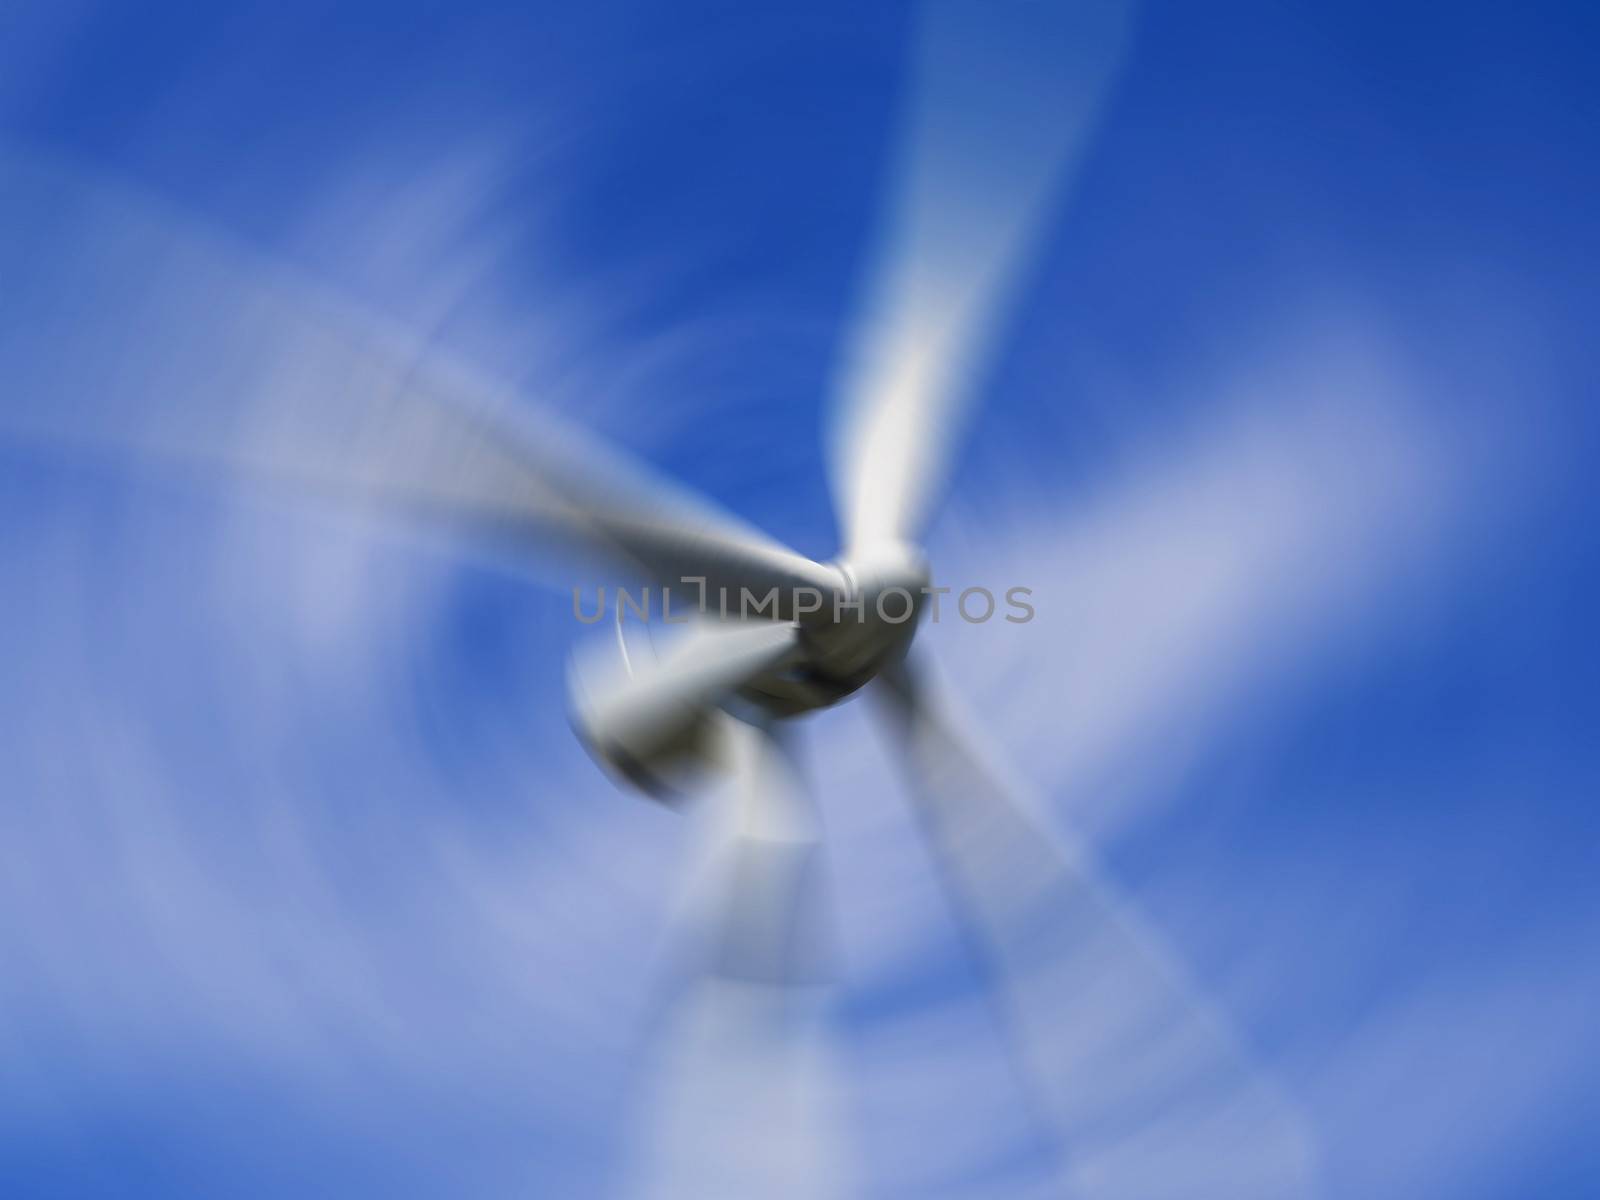 Wind turbine blades spinning by f/2sumicron